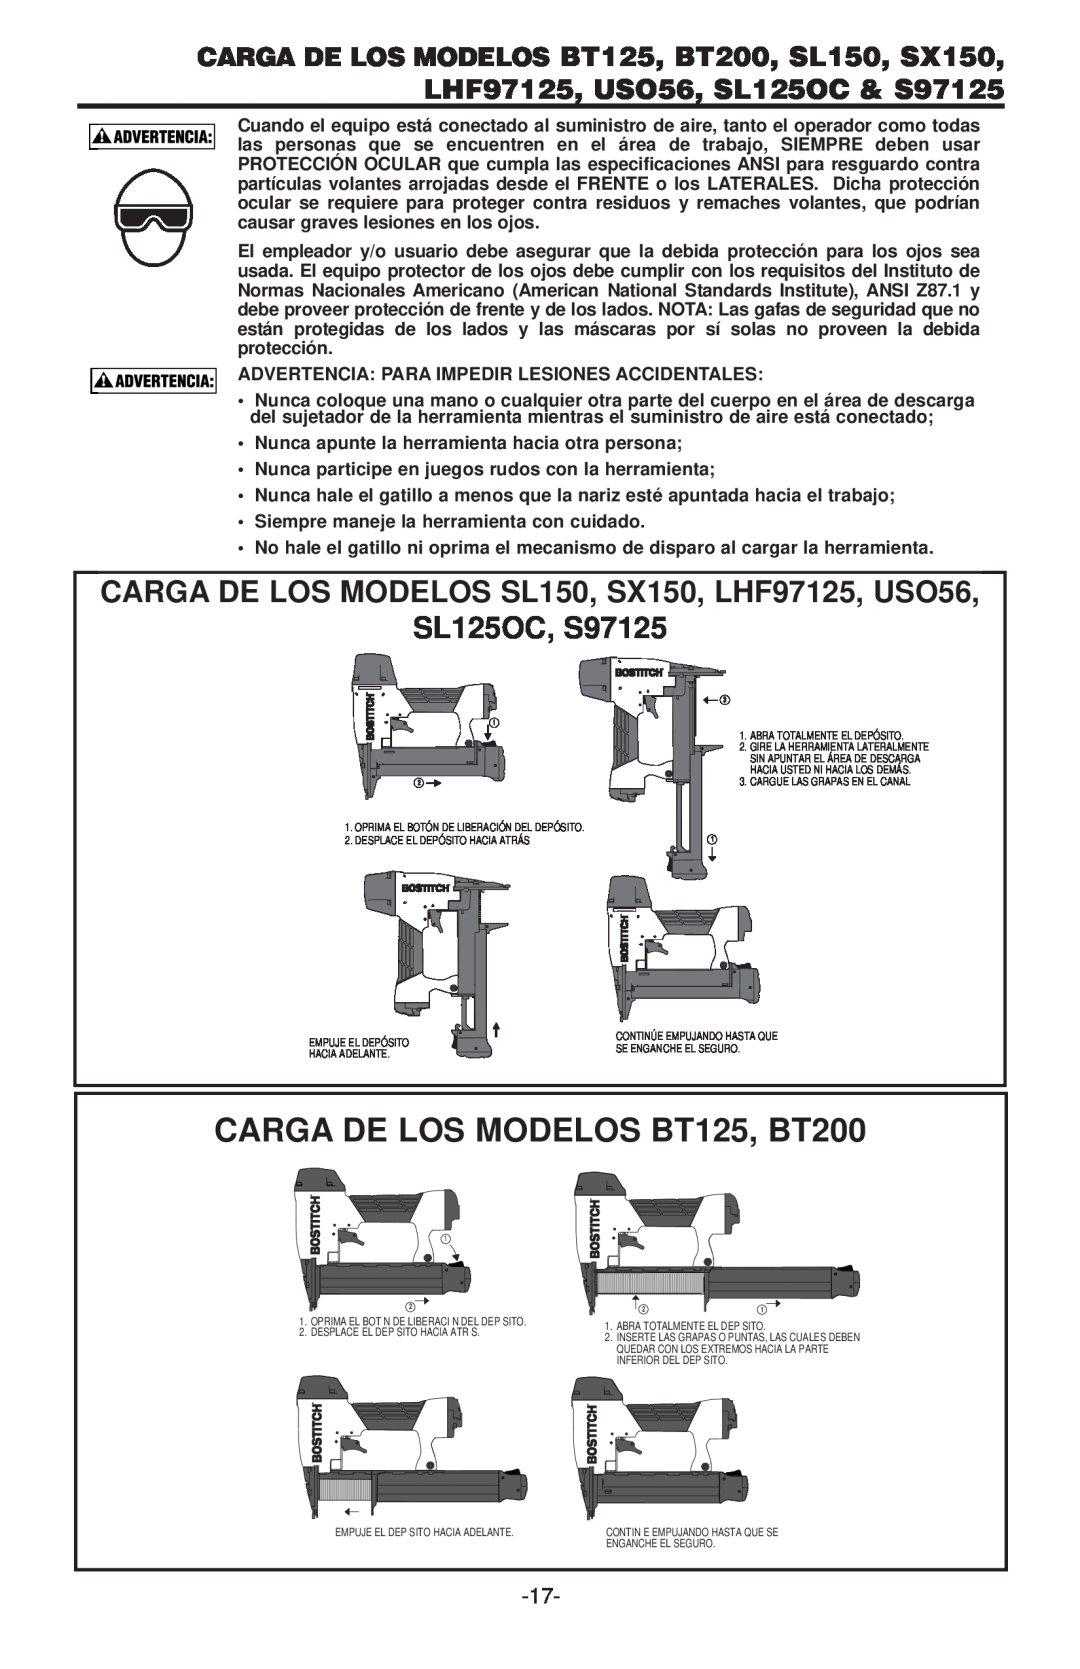 Inova SX150-BHF CARGA DE LOS MODELOS BT125, BT200, CARGA DE LOS MODELOS SL150, SX150, LHF97125, USO56 SL125OC, S97125 